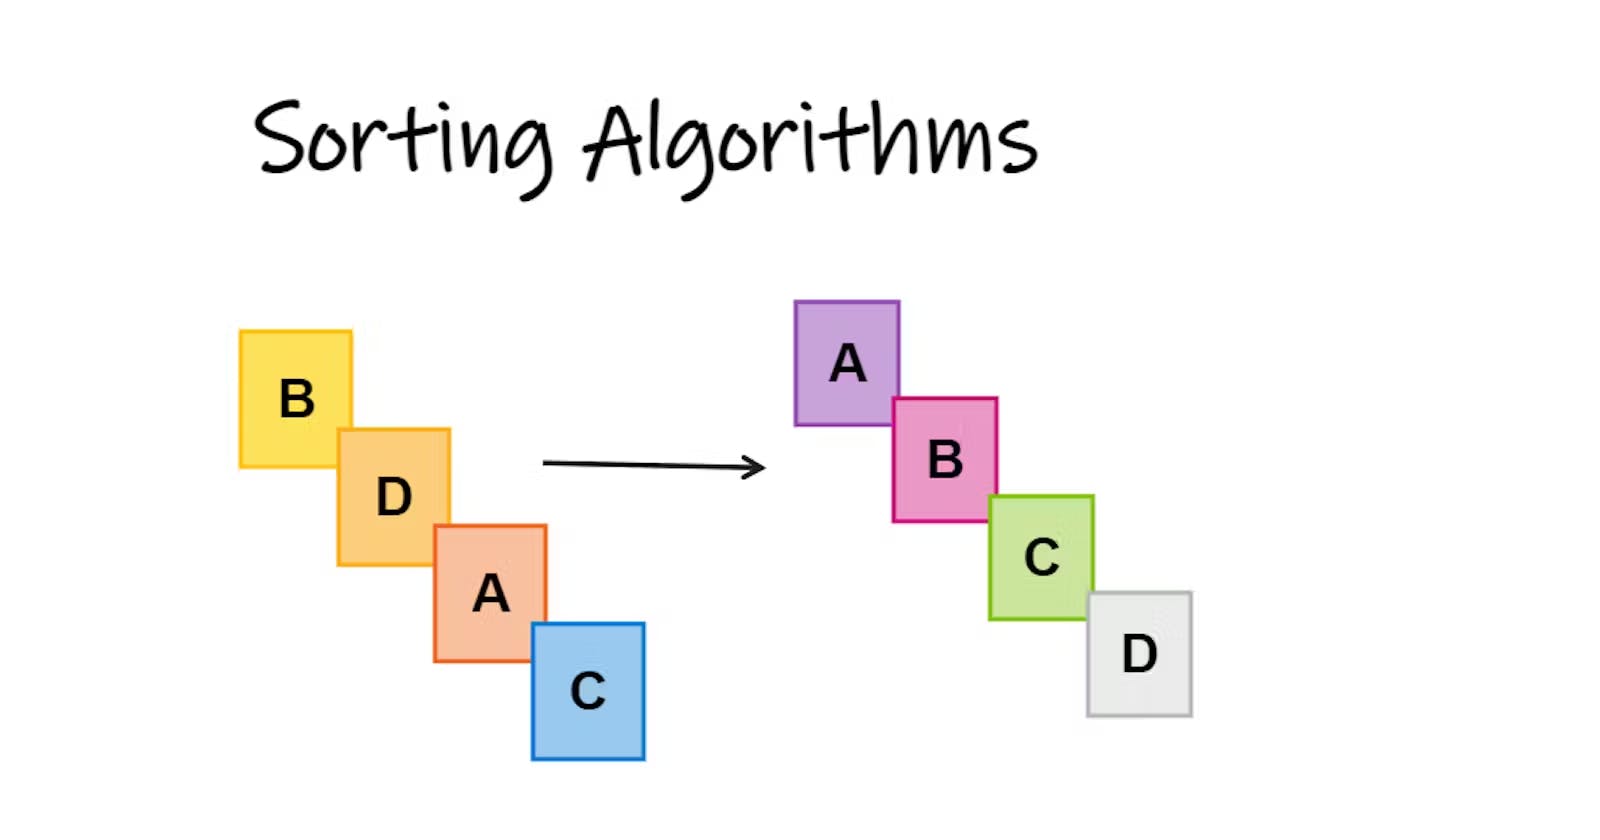 All sorting algorithms - 2